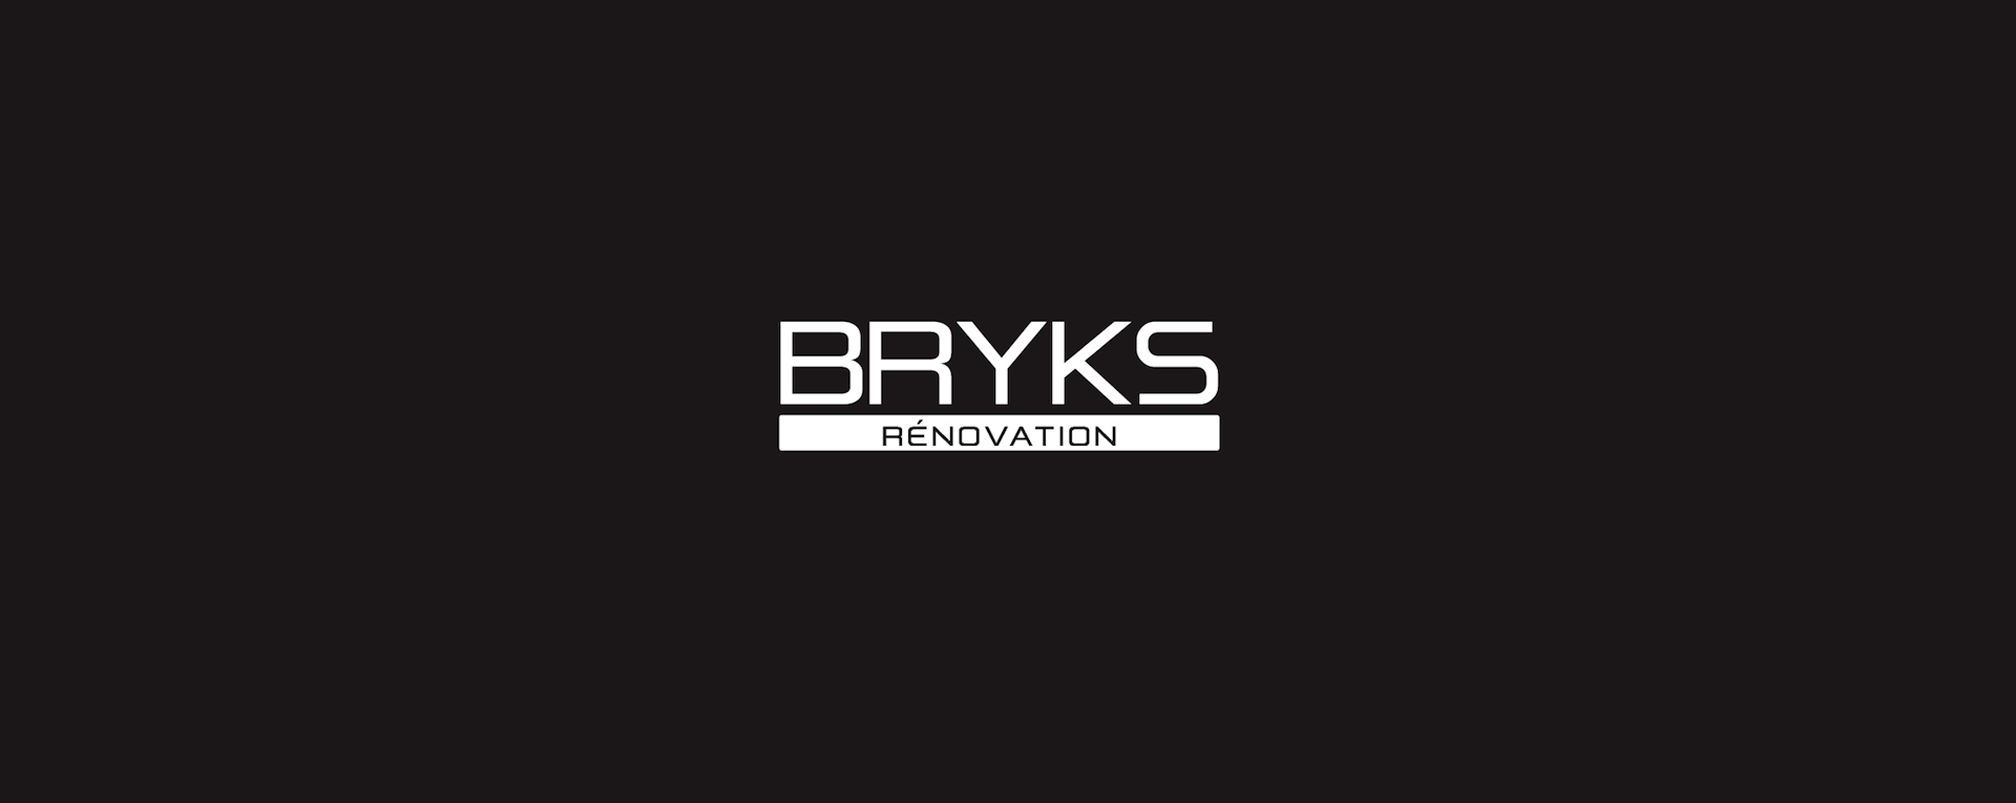 Bryks Renovation - Entrepreneur General